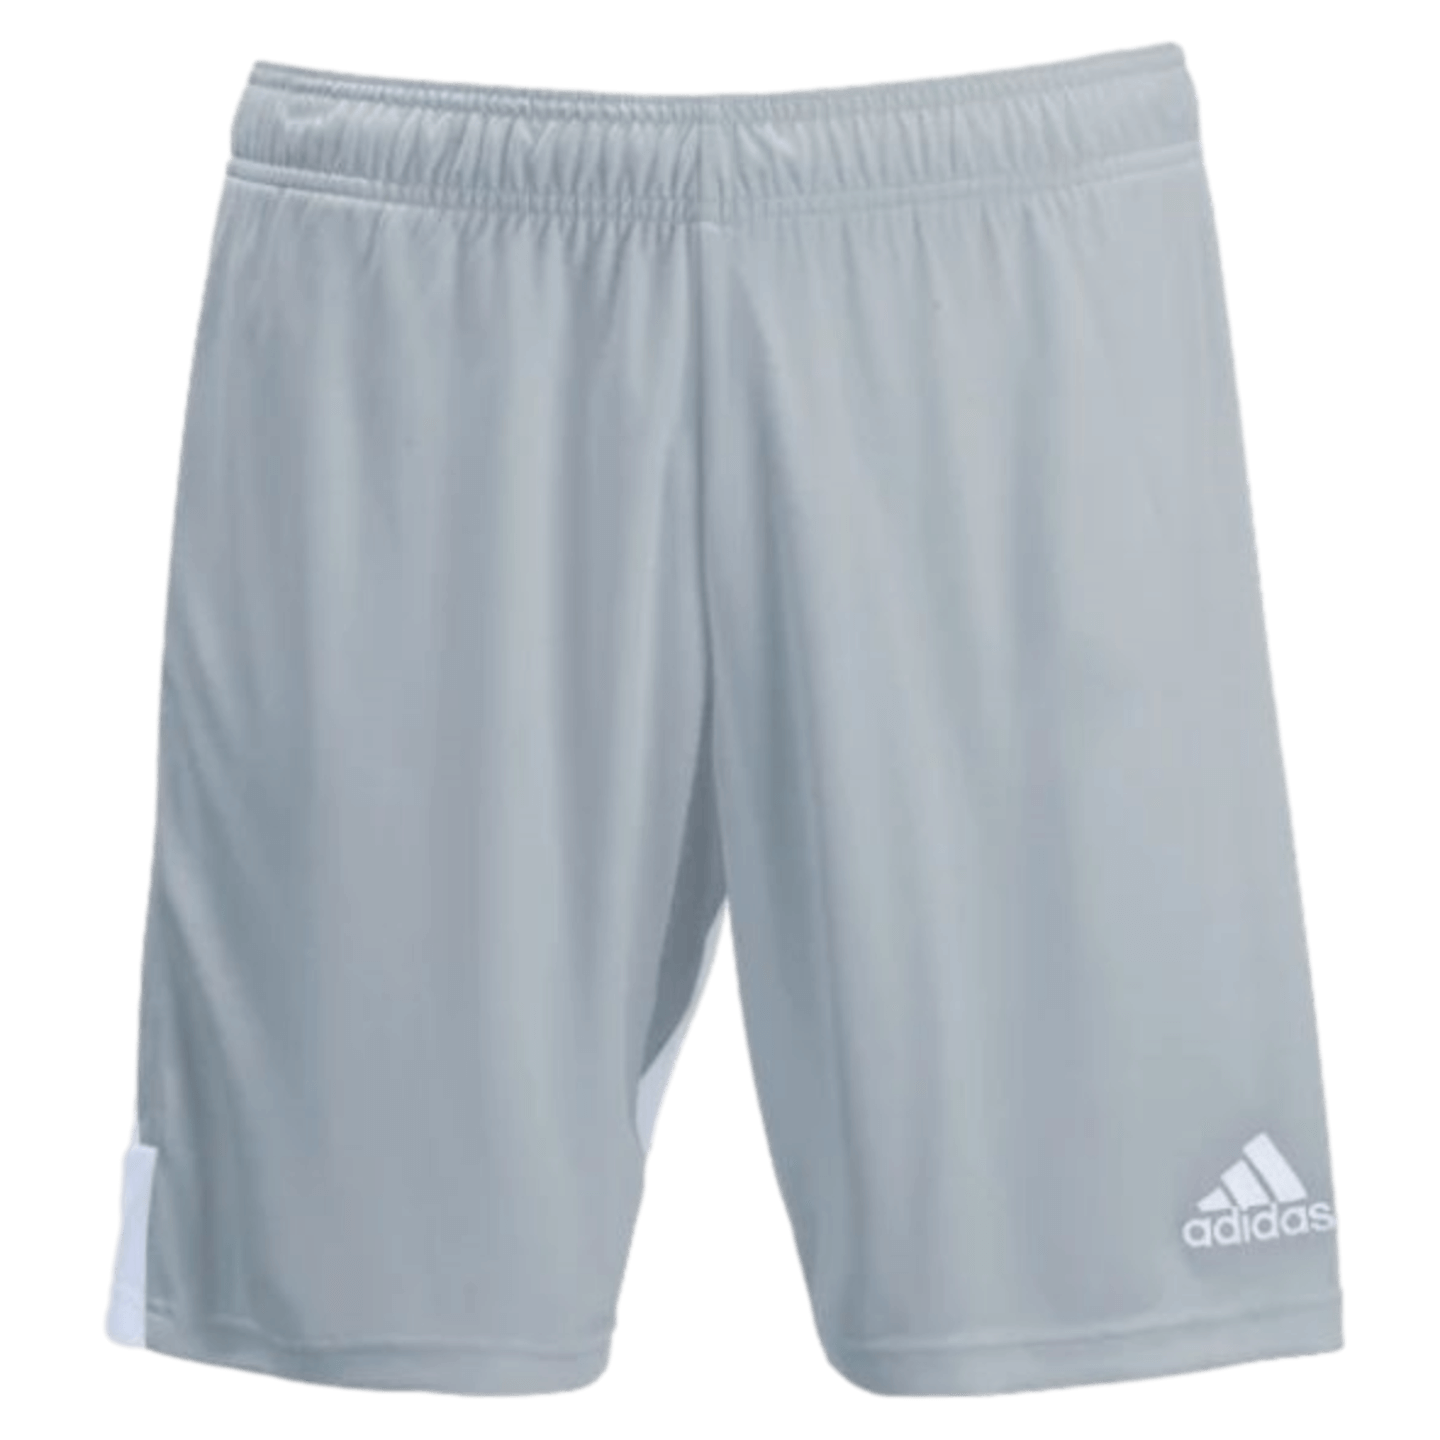 Adidas Men's Tastigo 19 Soccer Shorts - Grey